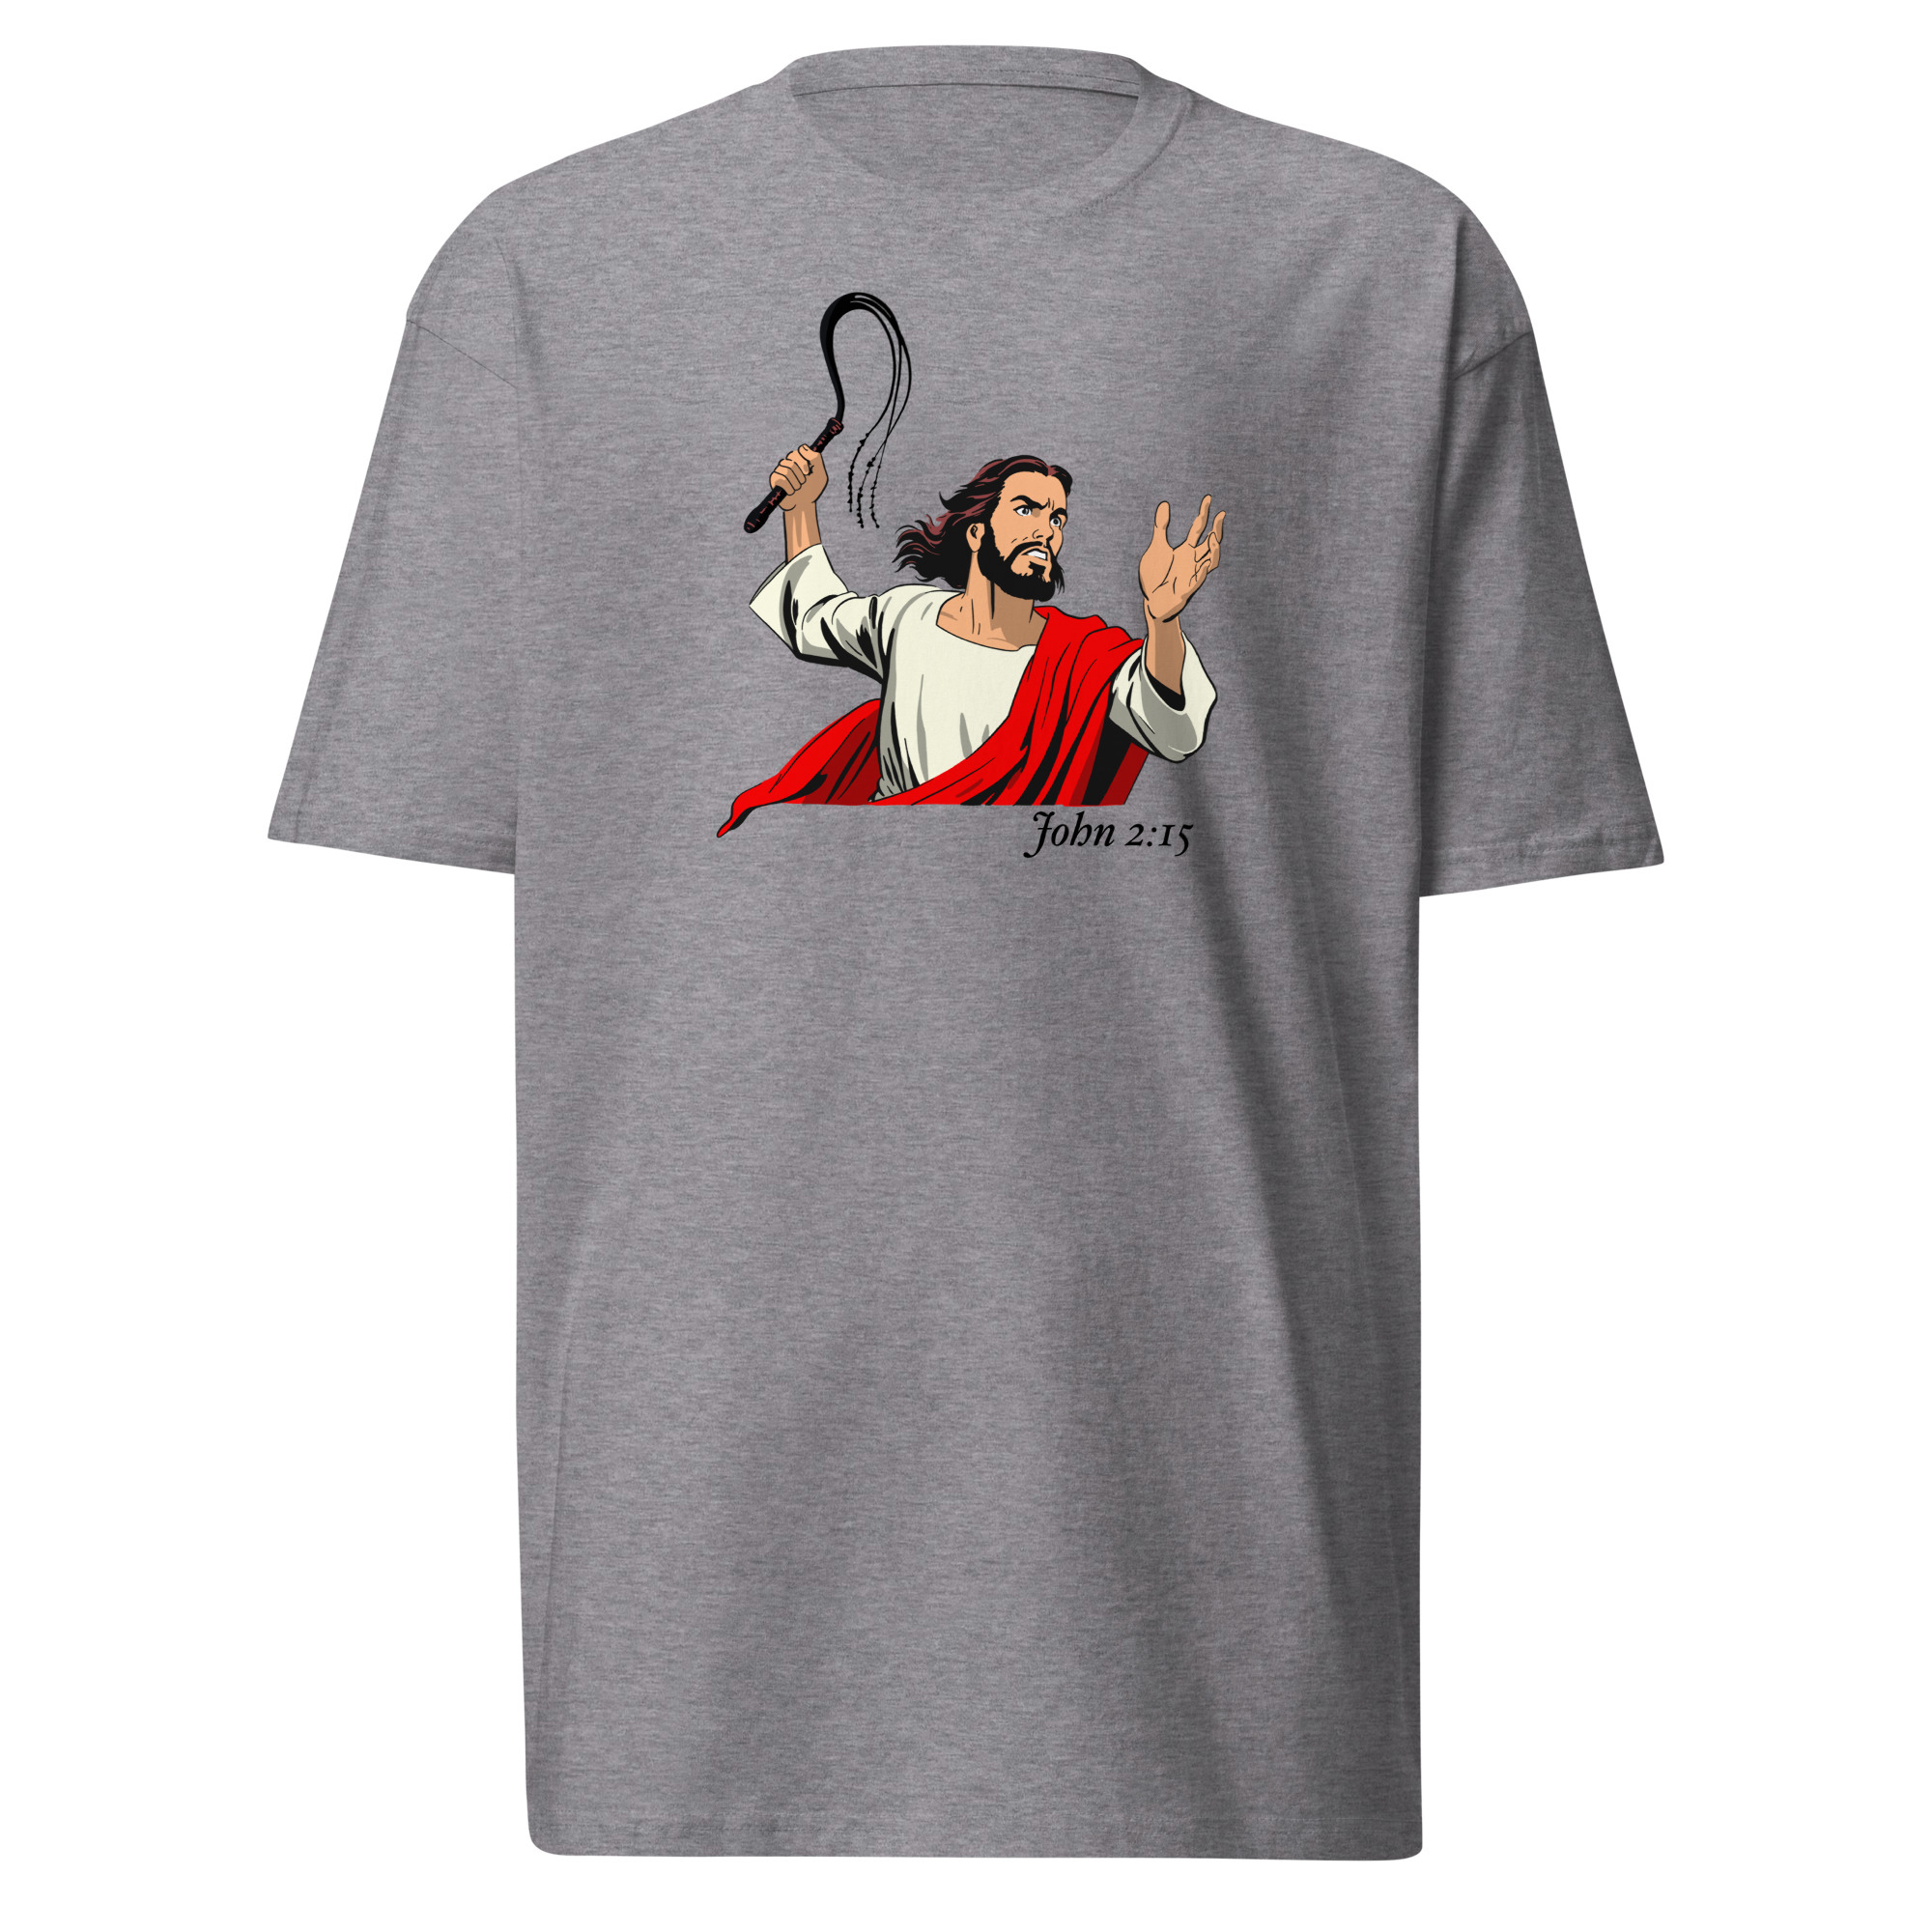 John 2:15 T-Shirt - Carbon Grey / L